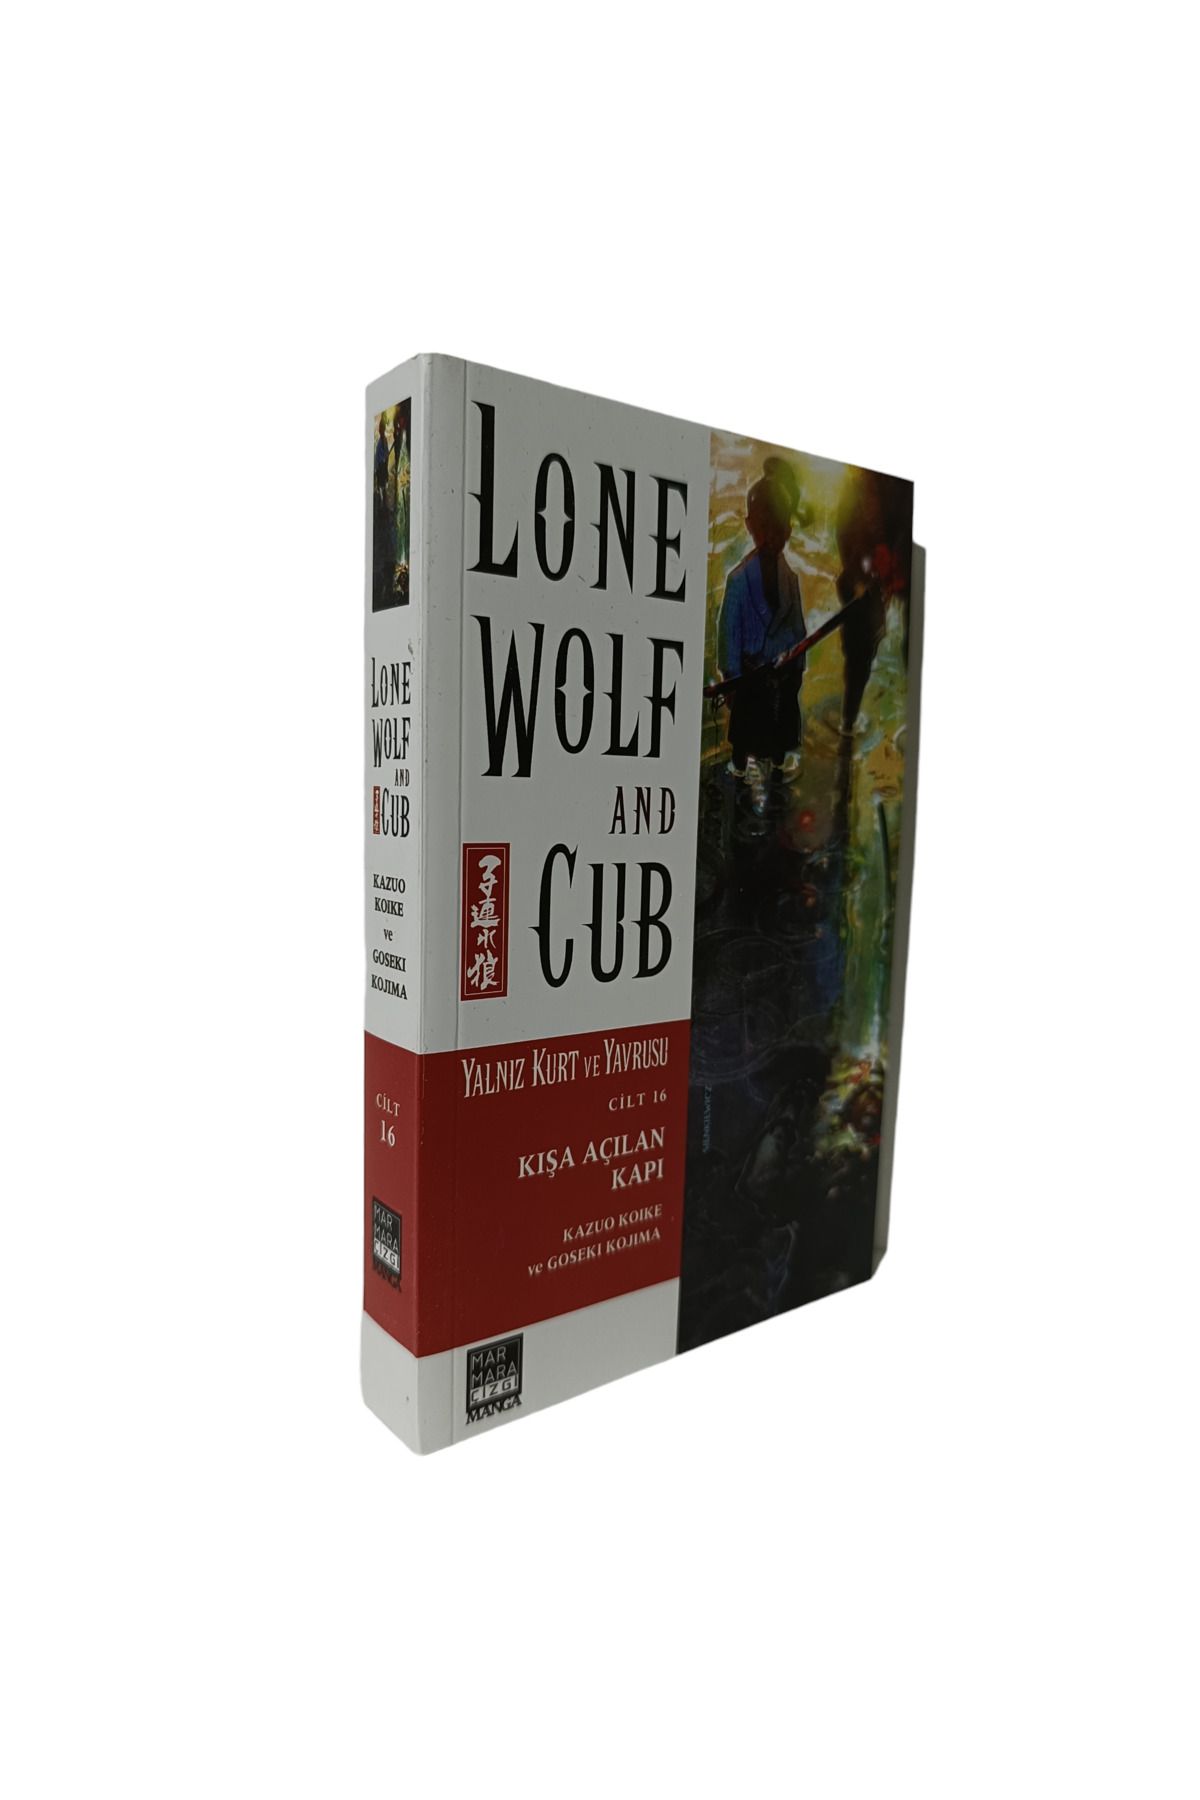 Marmara Çizgi Yayınları Lone Wolf And Cub Manga Serisi Cilt 16 - Kazuo Koike - Yalnız Kurt ve Yavrusu